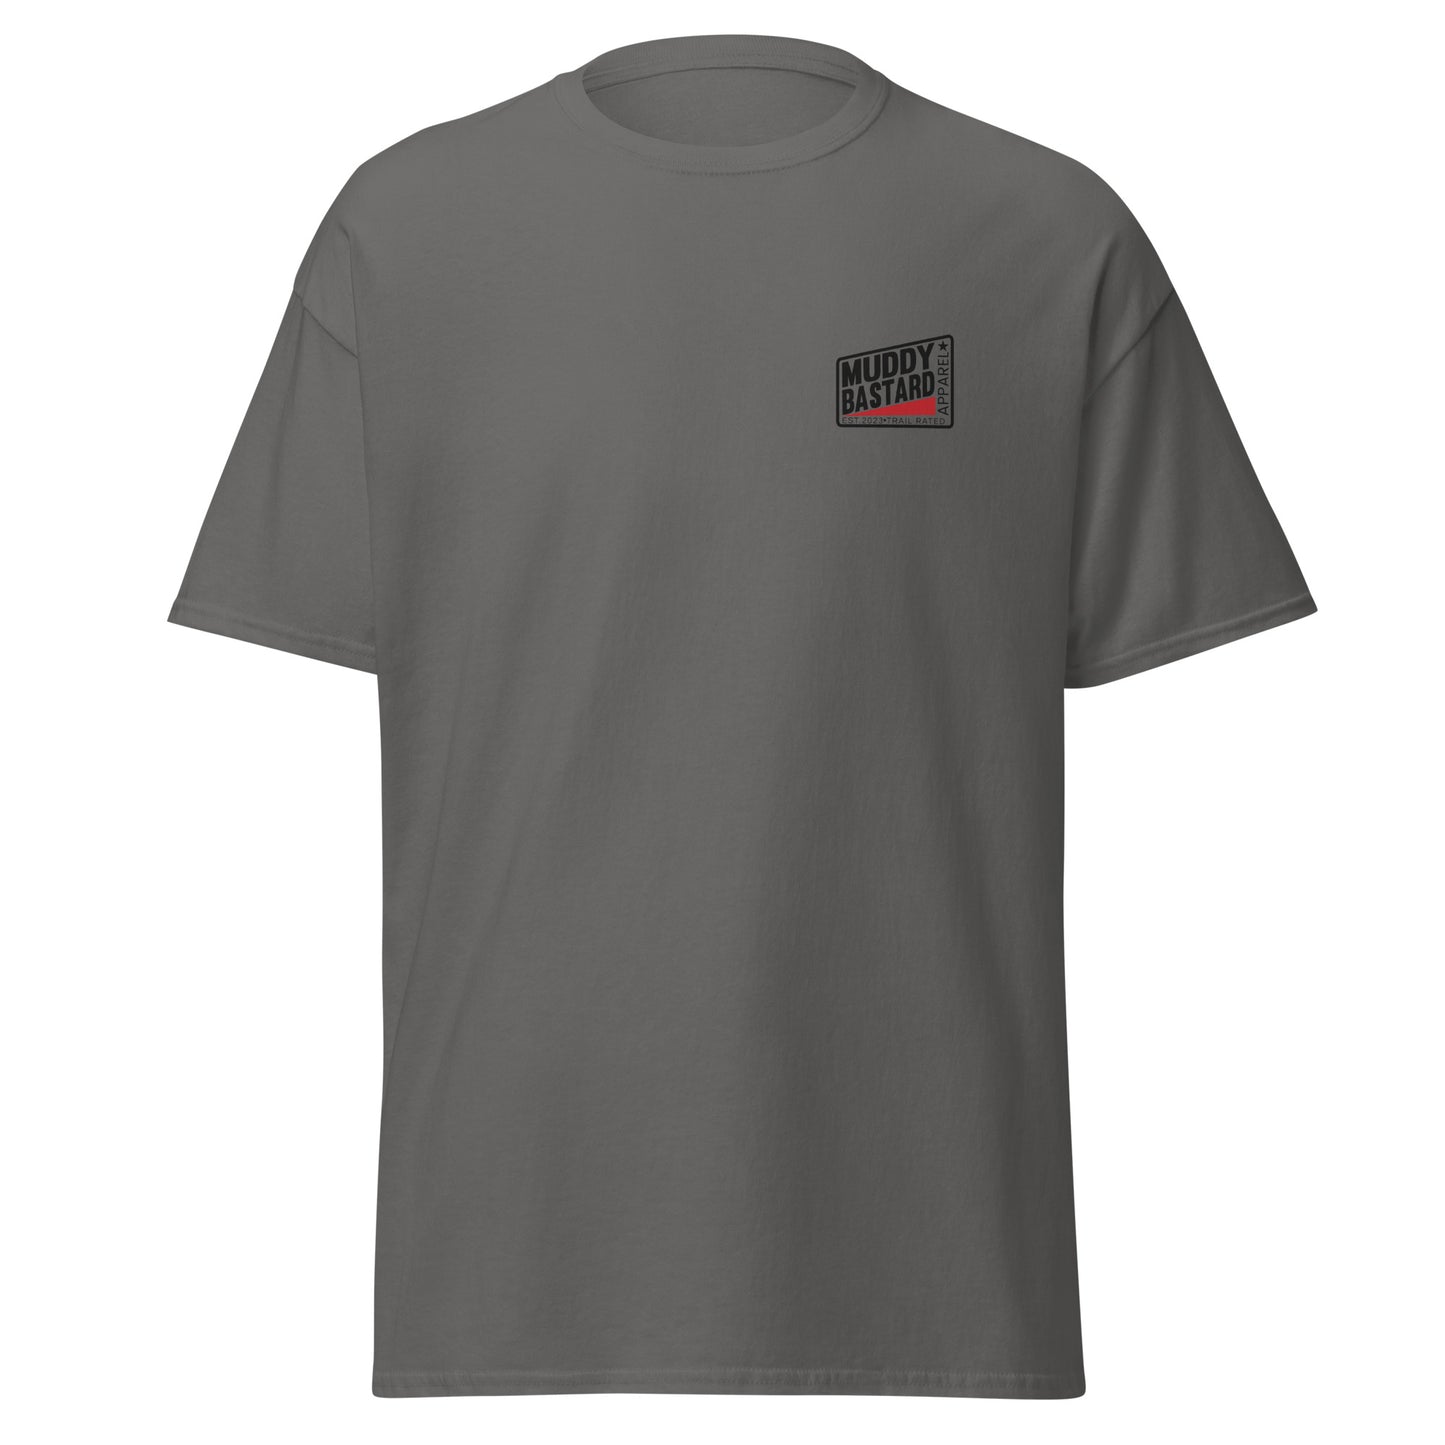 Muddy Bastard Rectangle Logo T-shirt (Front/Back)